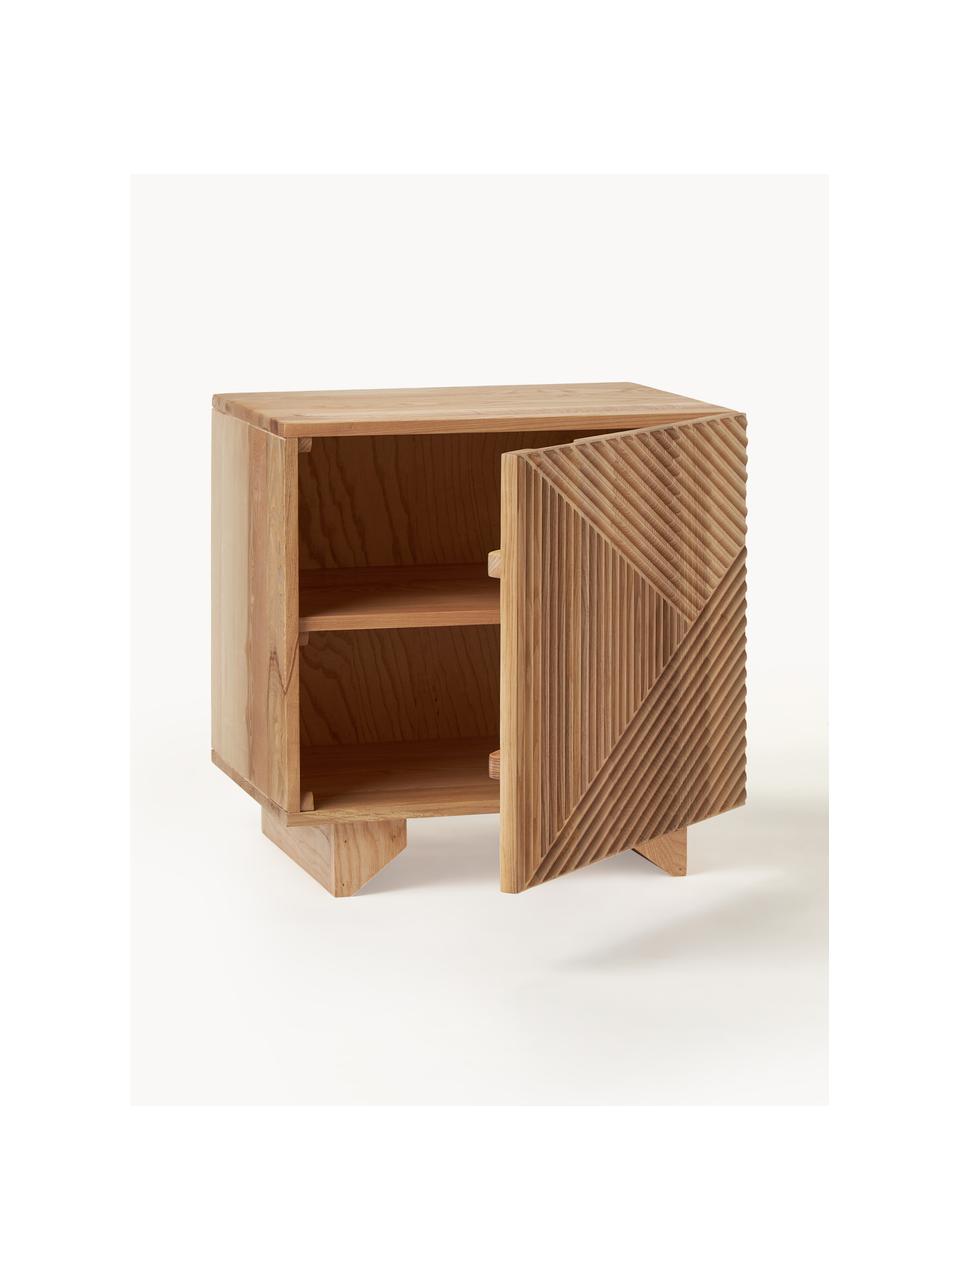 Nachttisch Louis aus Eschenholz, Massives Eschenholz, lackiert

Dieses Produkt wird aus nachhaltig gewonnenem, FSC®-zertifiziertem Holz gefertigt., Eschenholz, B 50 x H 50 cm